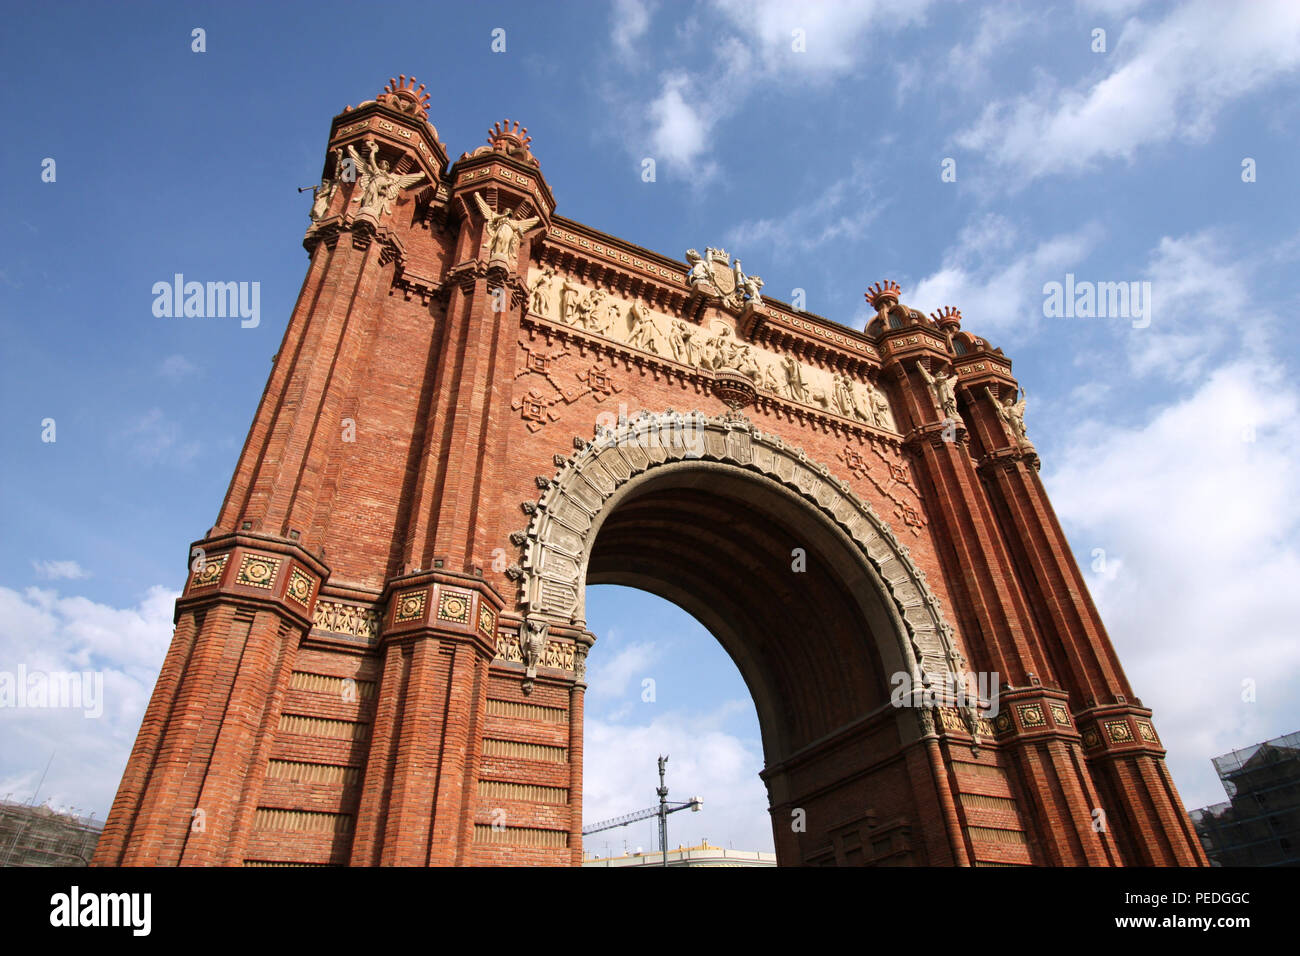 The Arc de Triomf (English: Triumphal Arch) - archway structure in Barcelona, Spain. Built by architect Josep Vilaseca i Casanovas. Moorish revival st Stock Photo